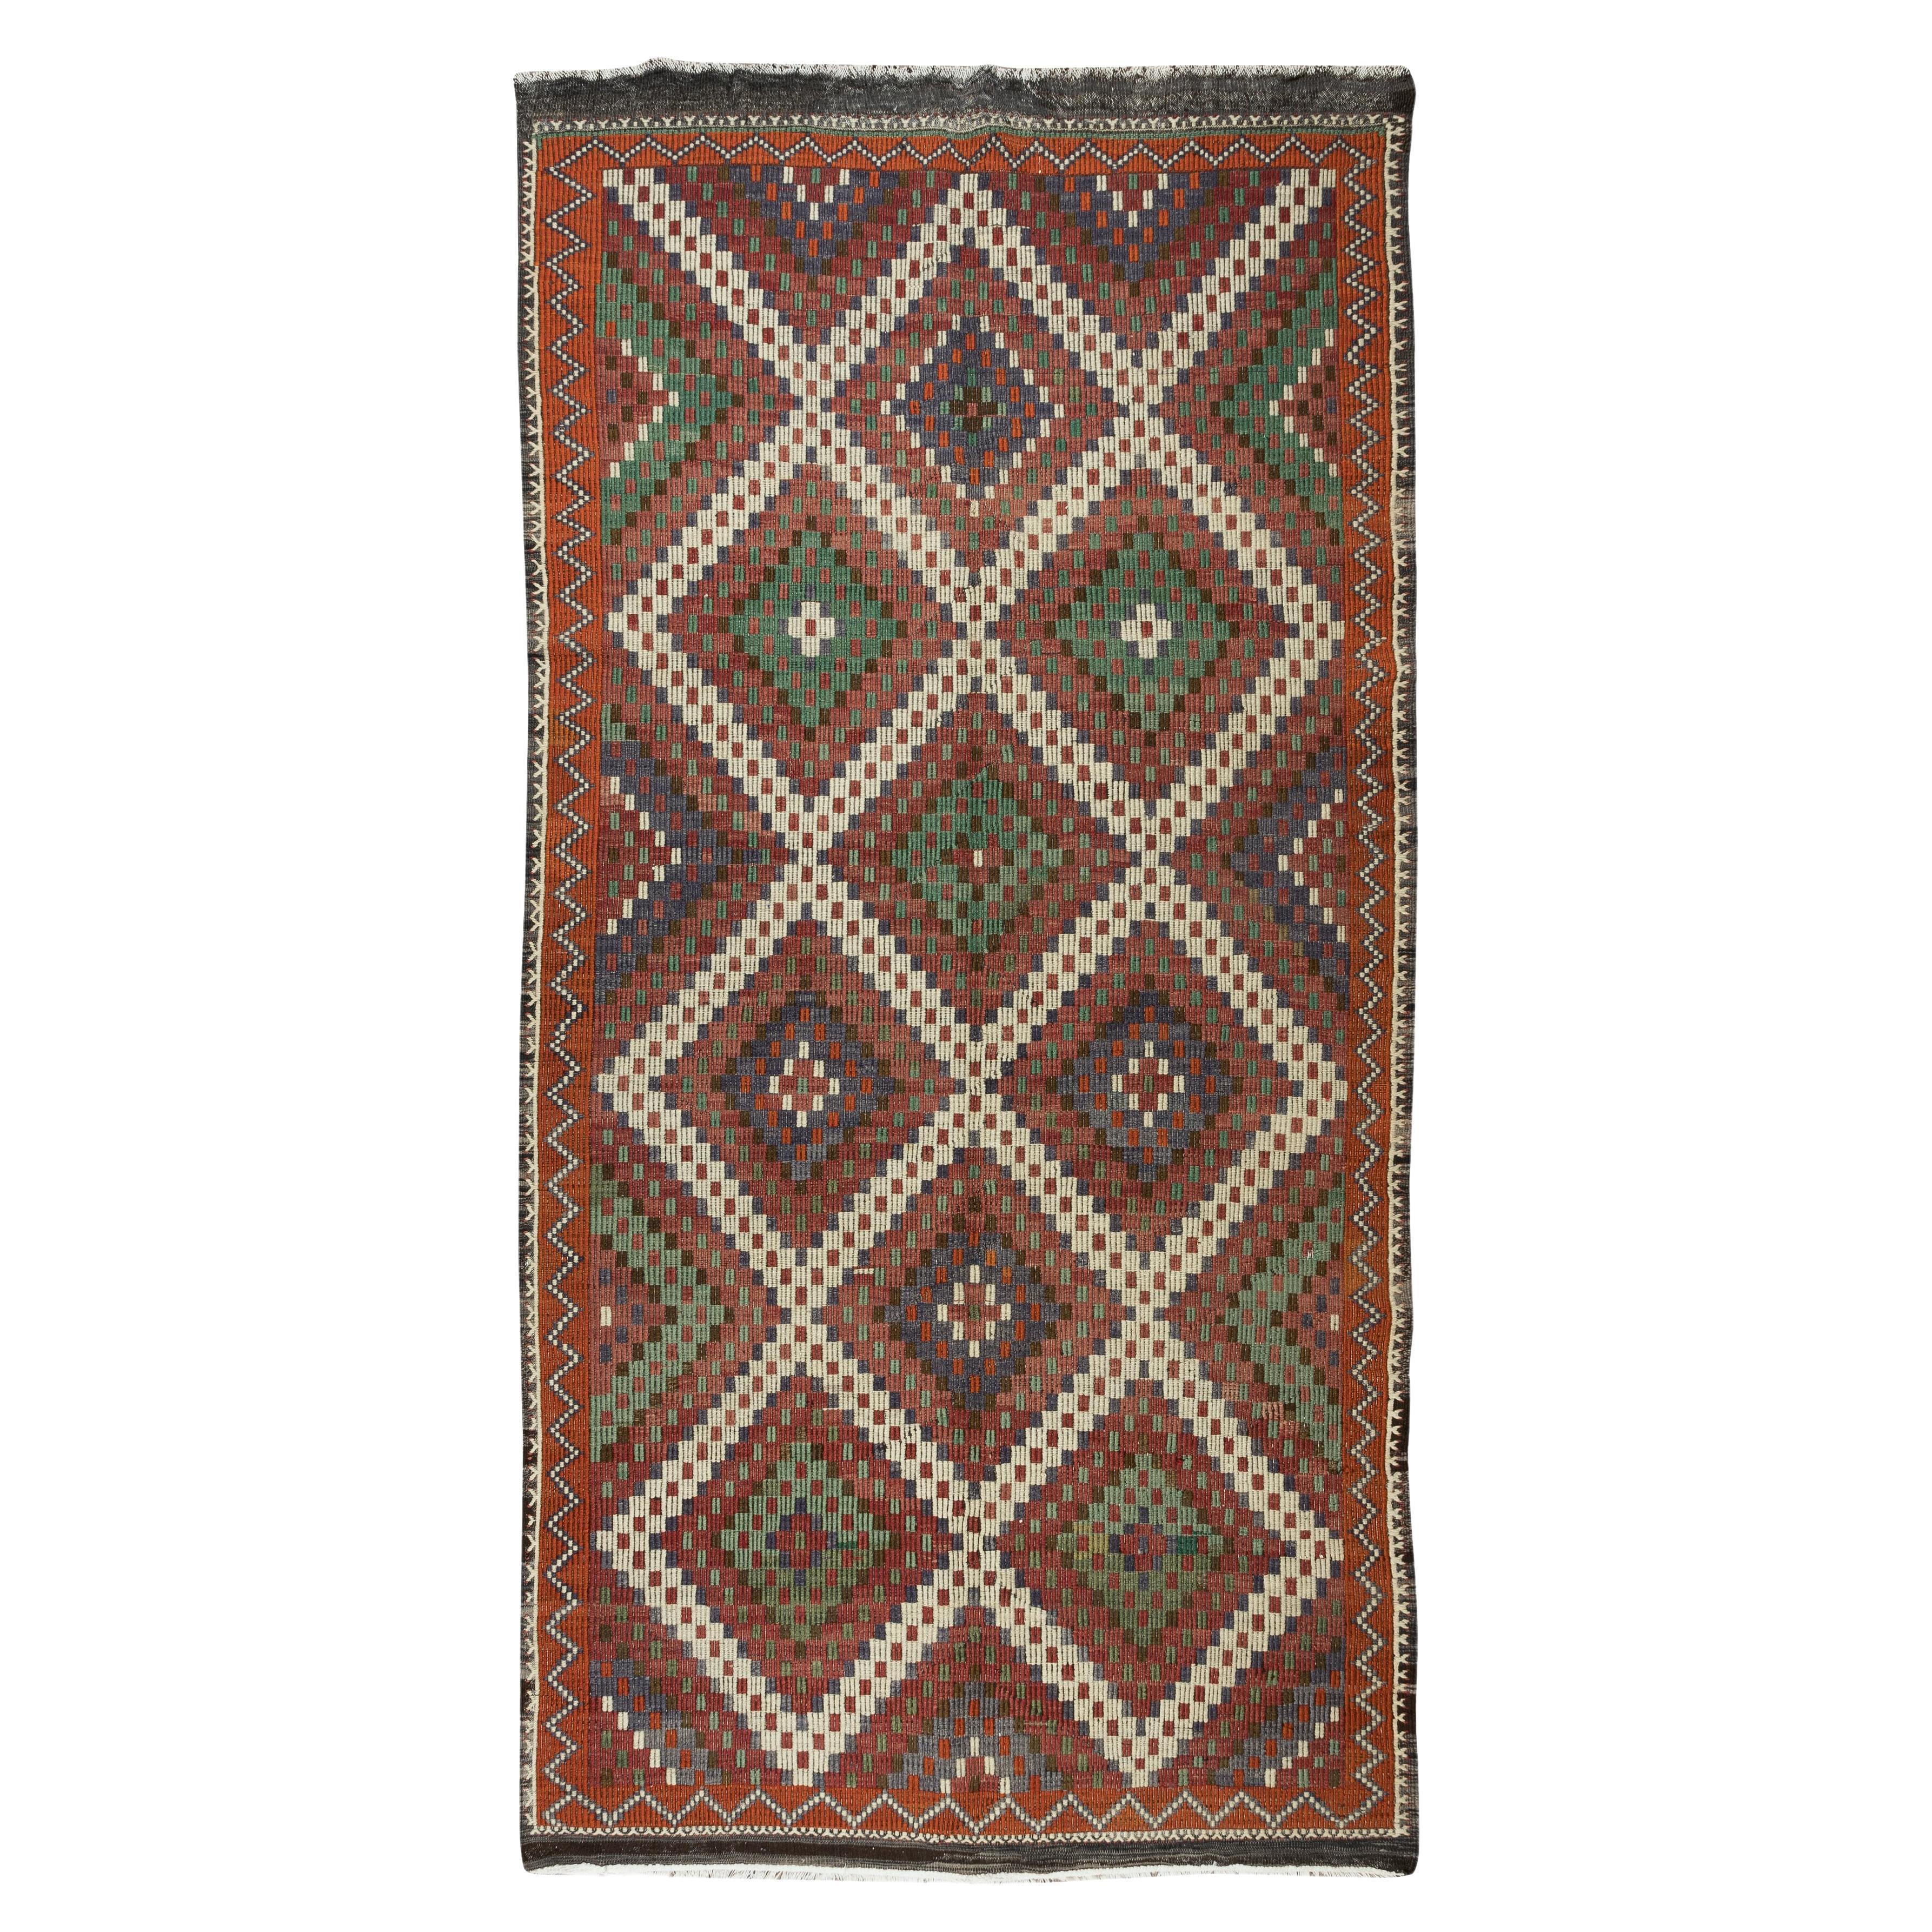 5.5x10.8 Ft Unique Vintage Anatolian Jijim Kilim, Hand-Woven Rug Made of Wool